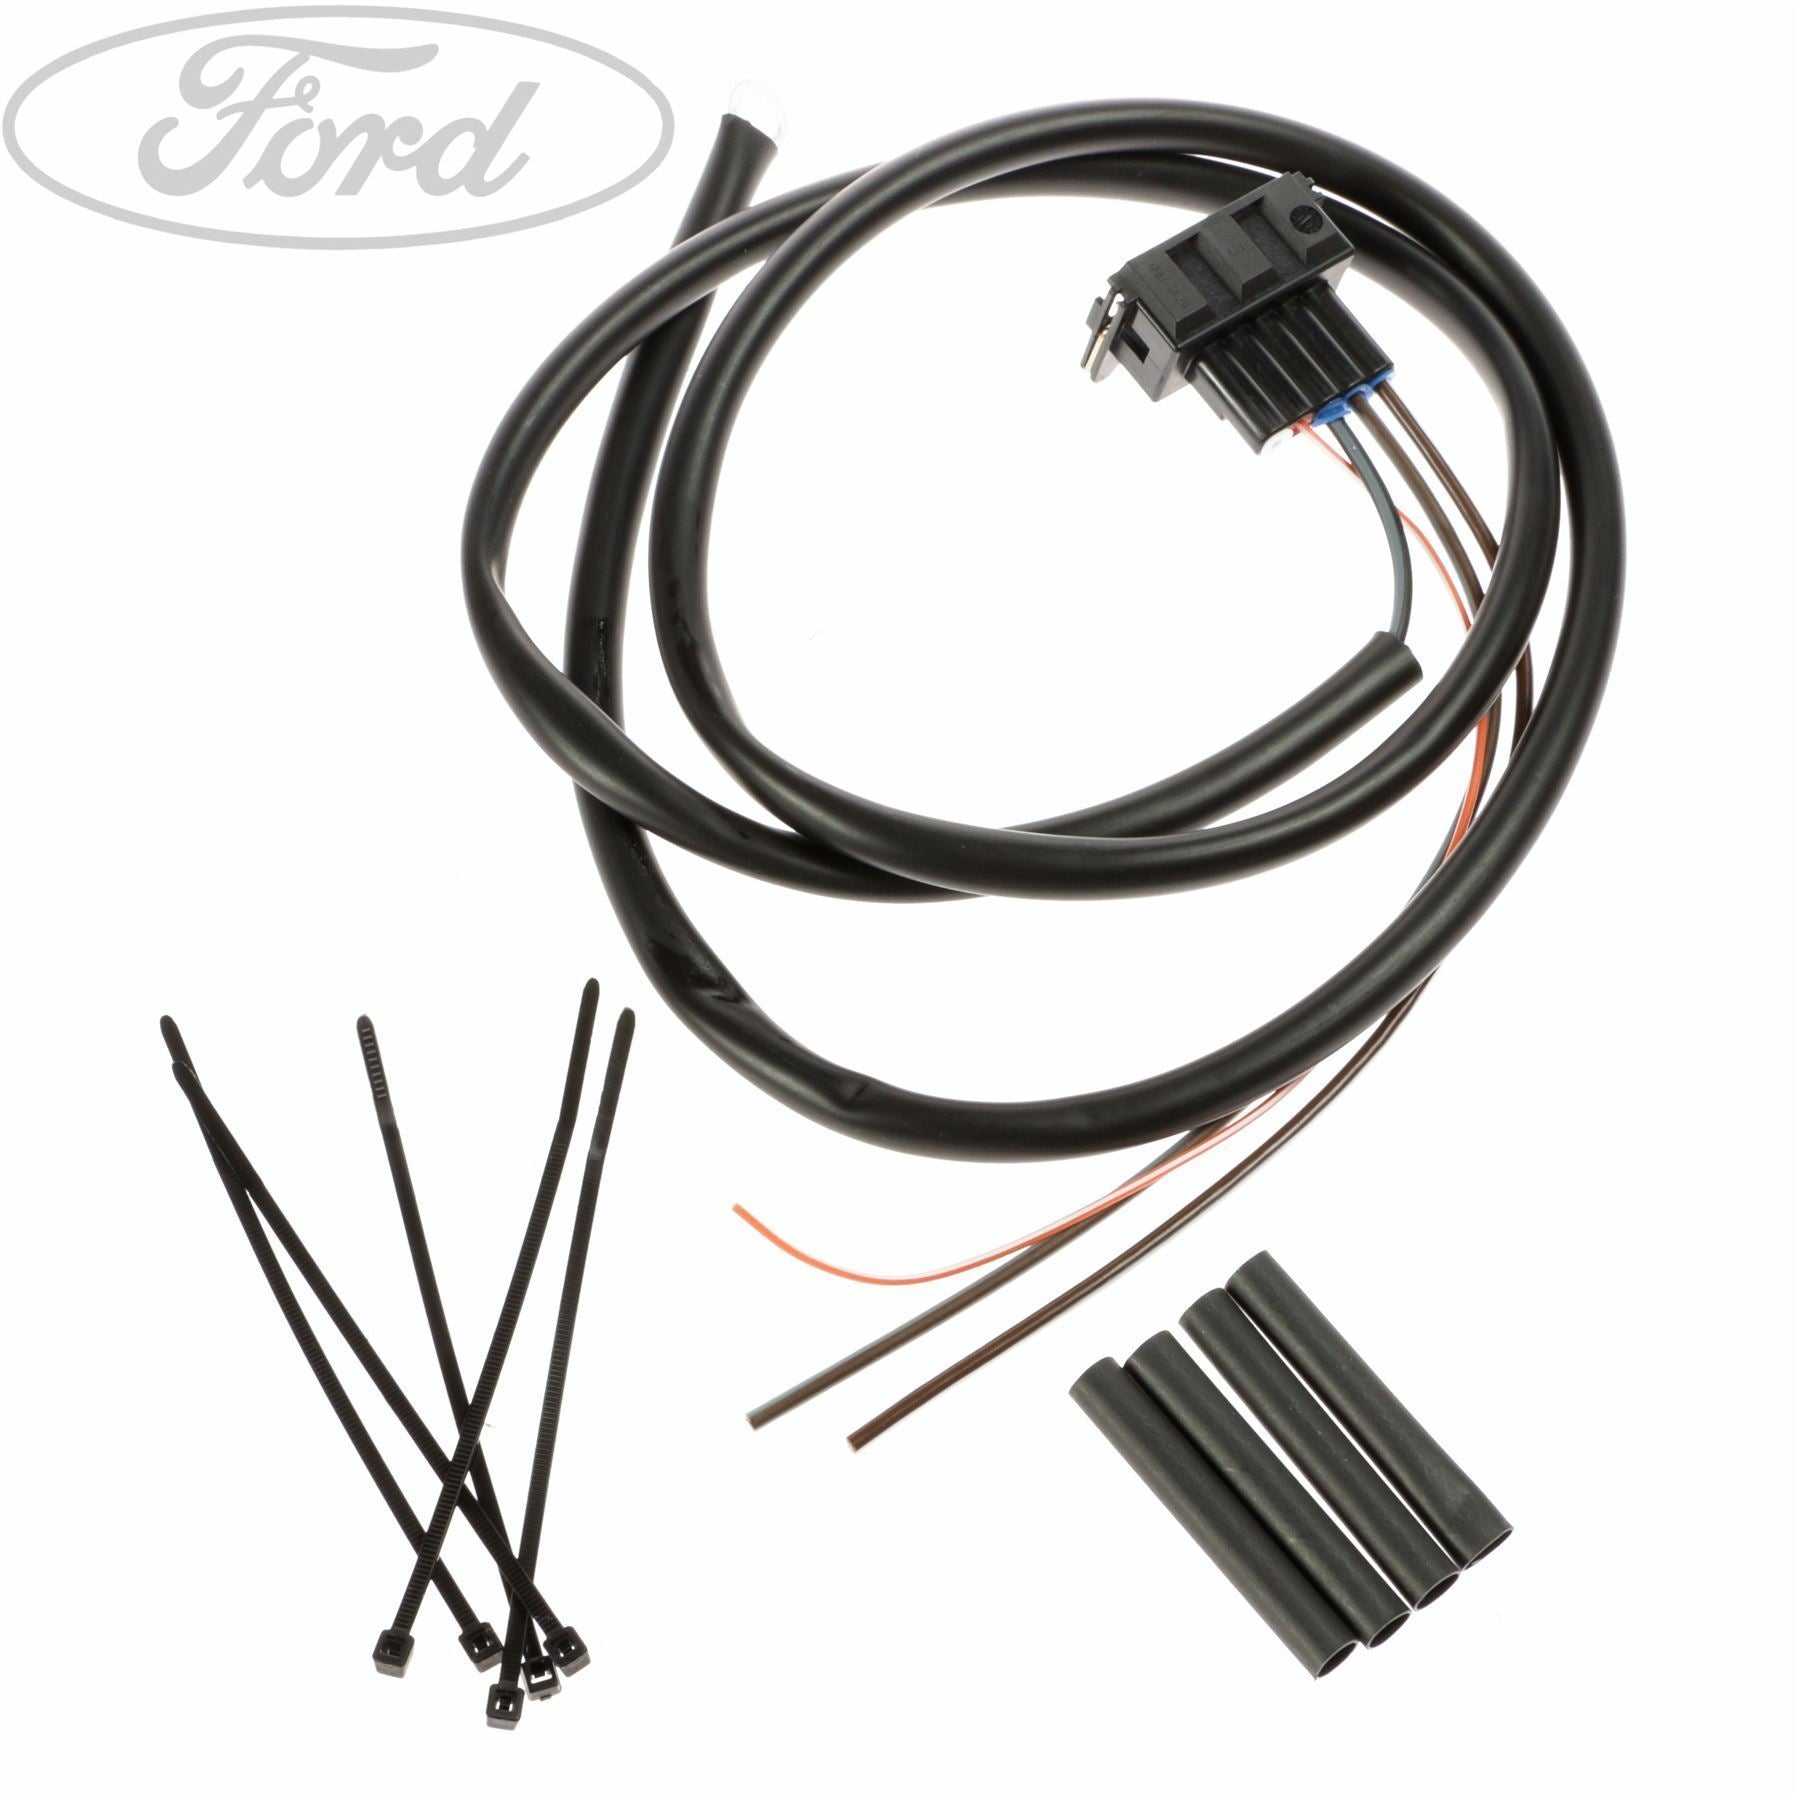 Ford, TRANSIT FRONT WIPER MOTOR WIRE KIT 06-14 TT9